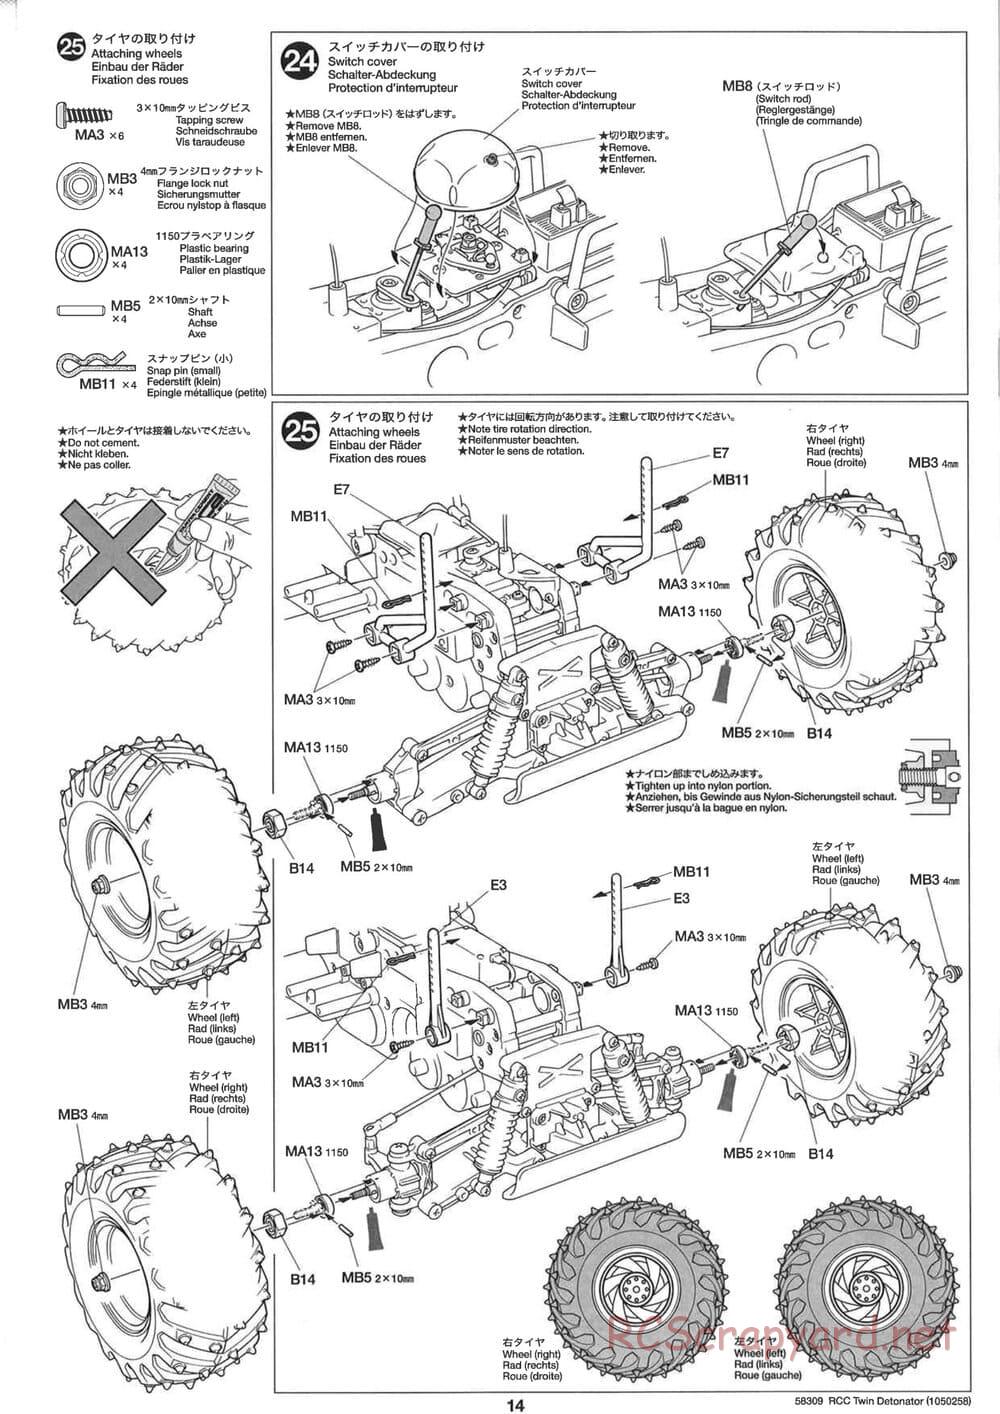 Tamiya - Twin Detonator - WR-01 Chassis - Manual - Page 14